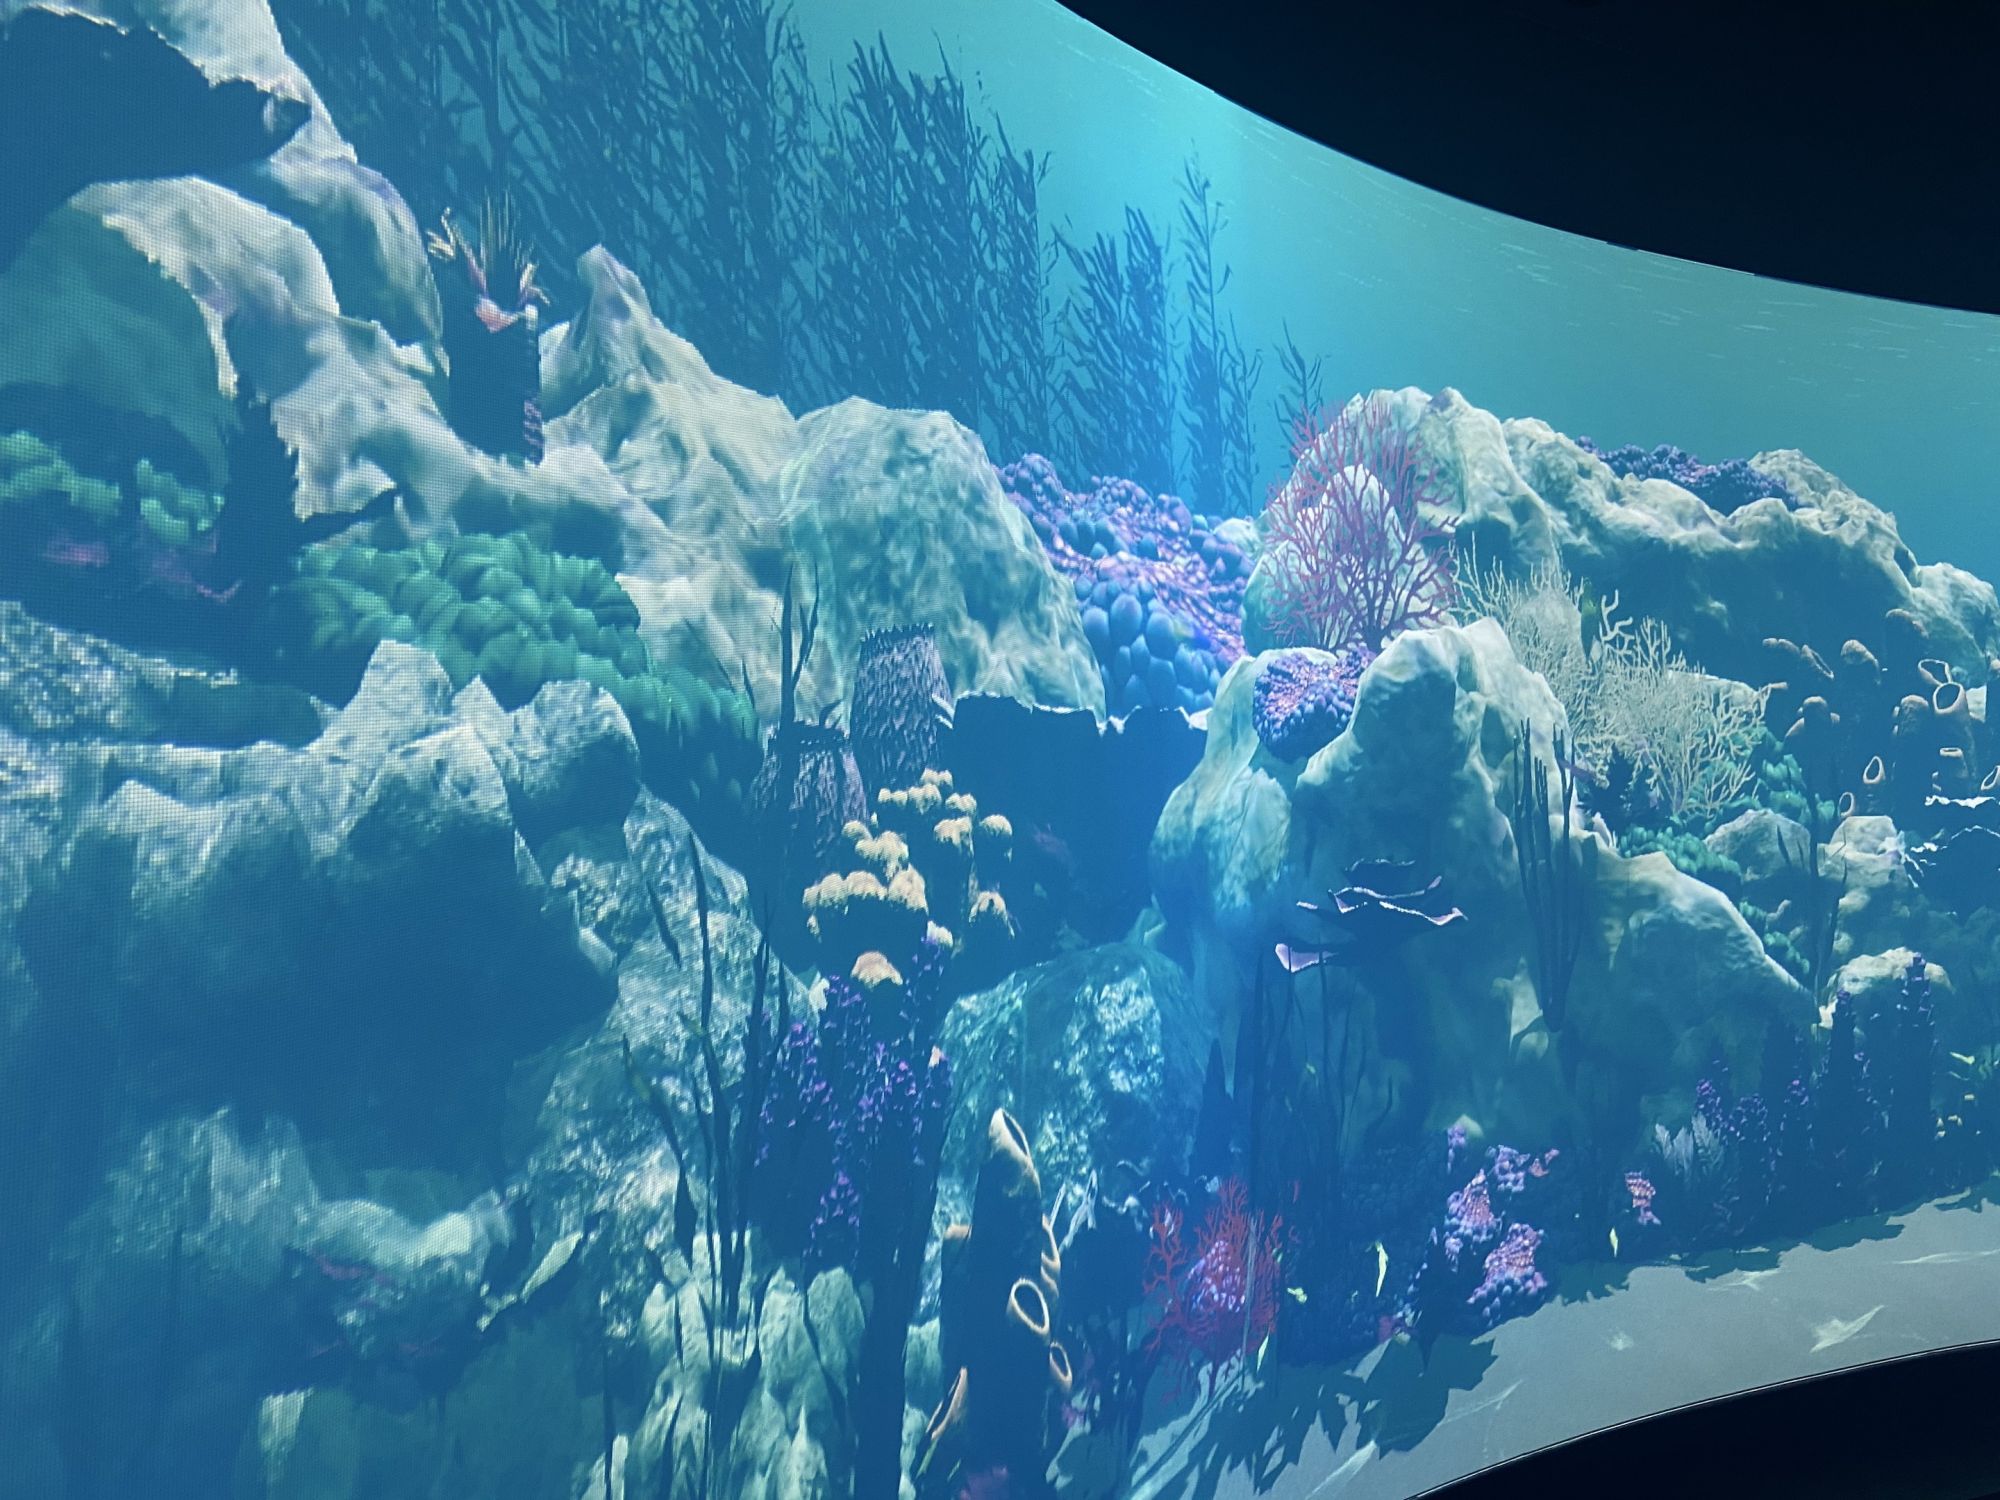 Image showing a virtual aquarium